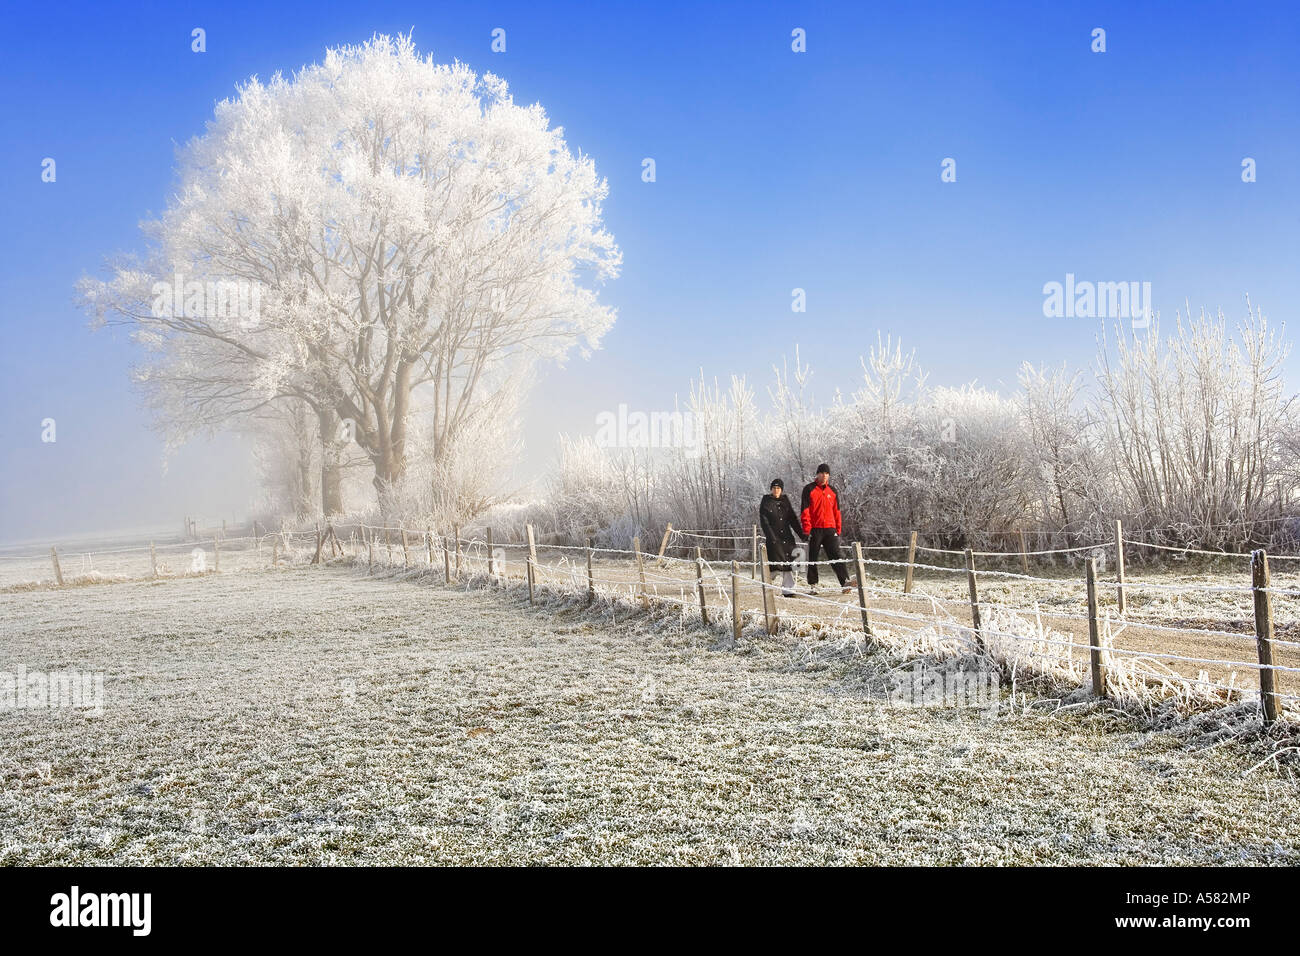 People walking in winter, Sense district, Fribourg, Switzerland Stock Photo